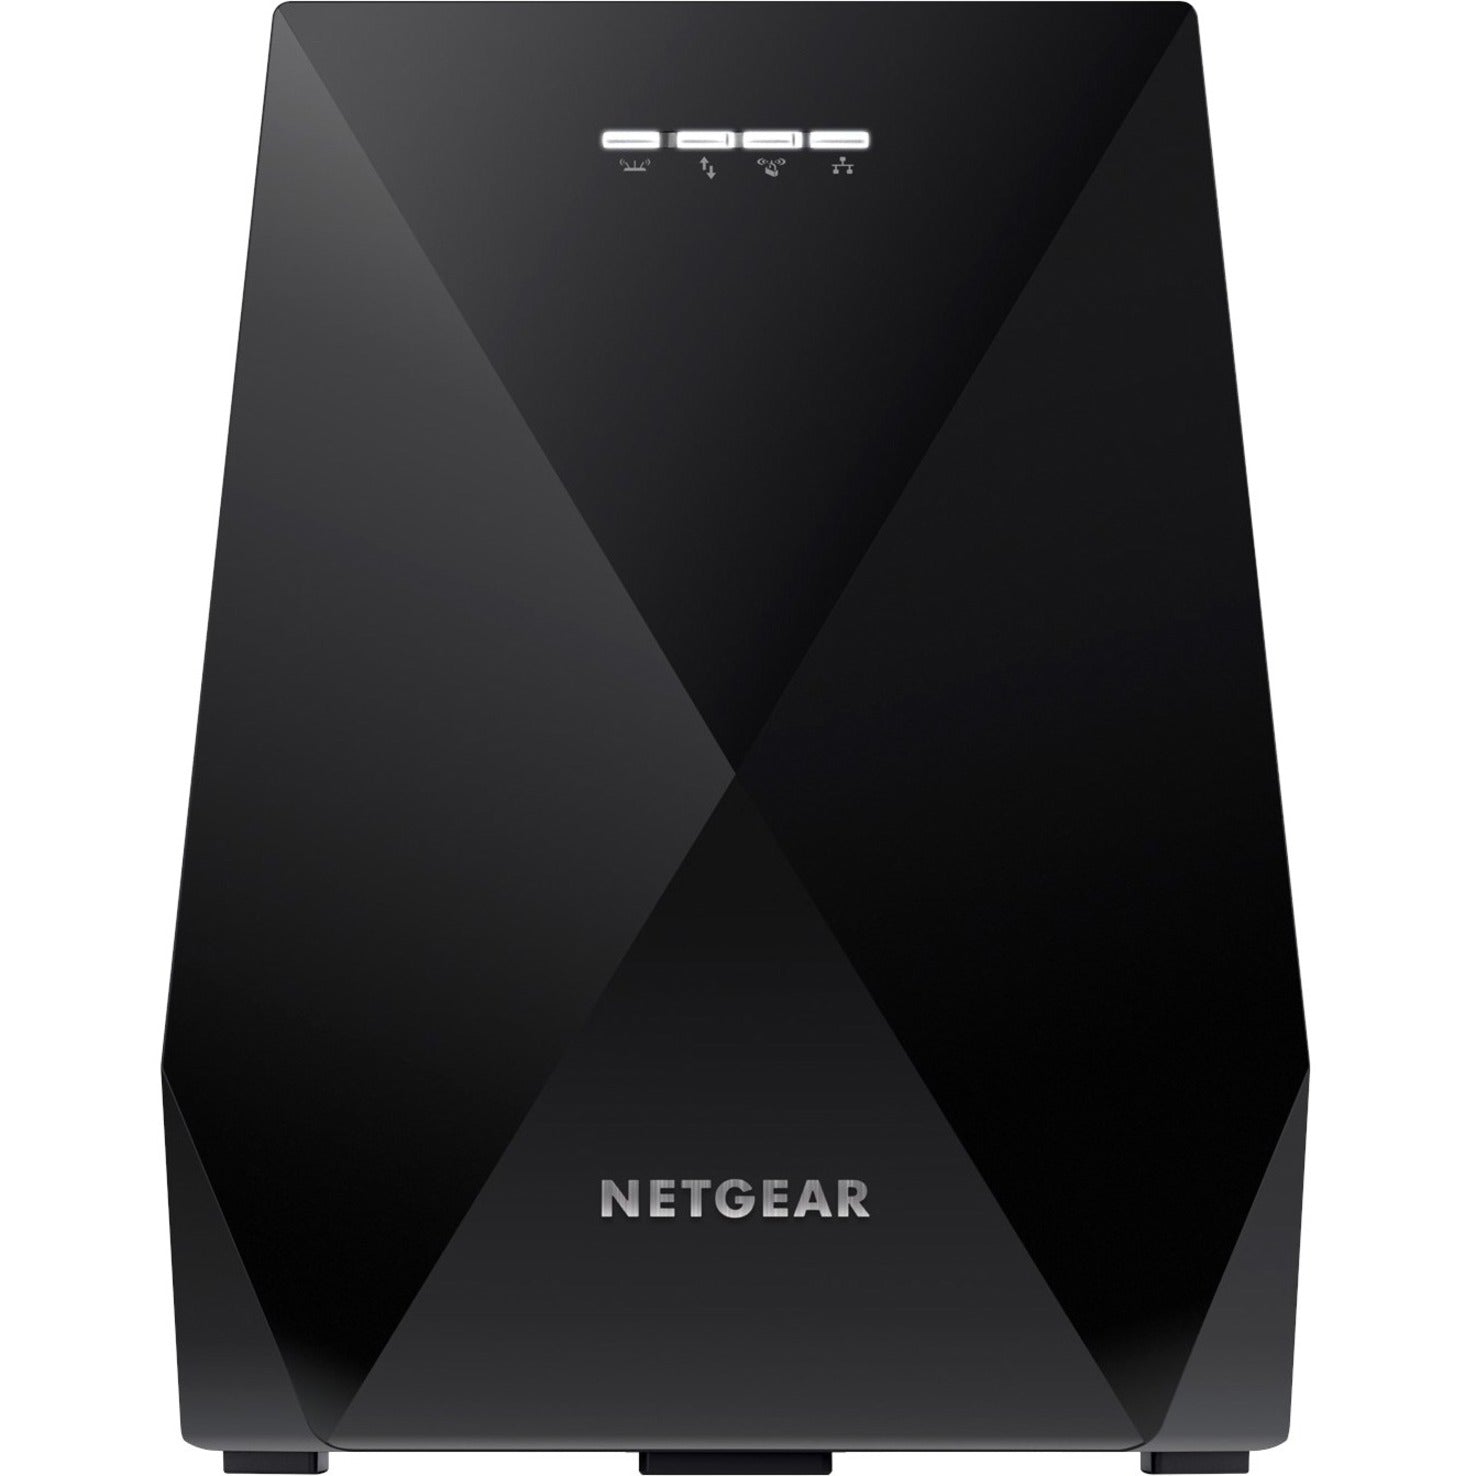 Netgear EX7700-100NAS Nighthawk X6 Tri-Band WiFi Mesh Extender, AC2200 Gigabit Ethernet, 2.20 Gbit/s